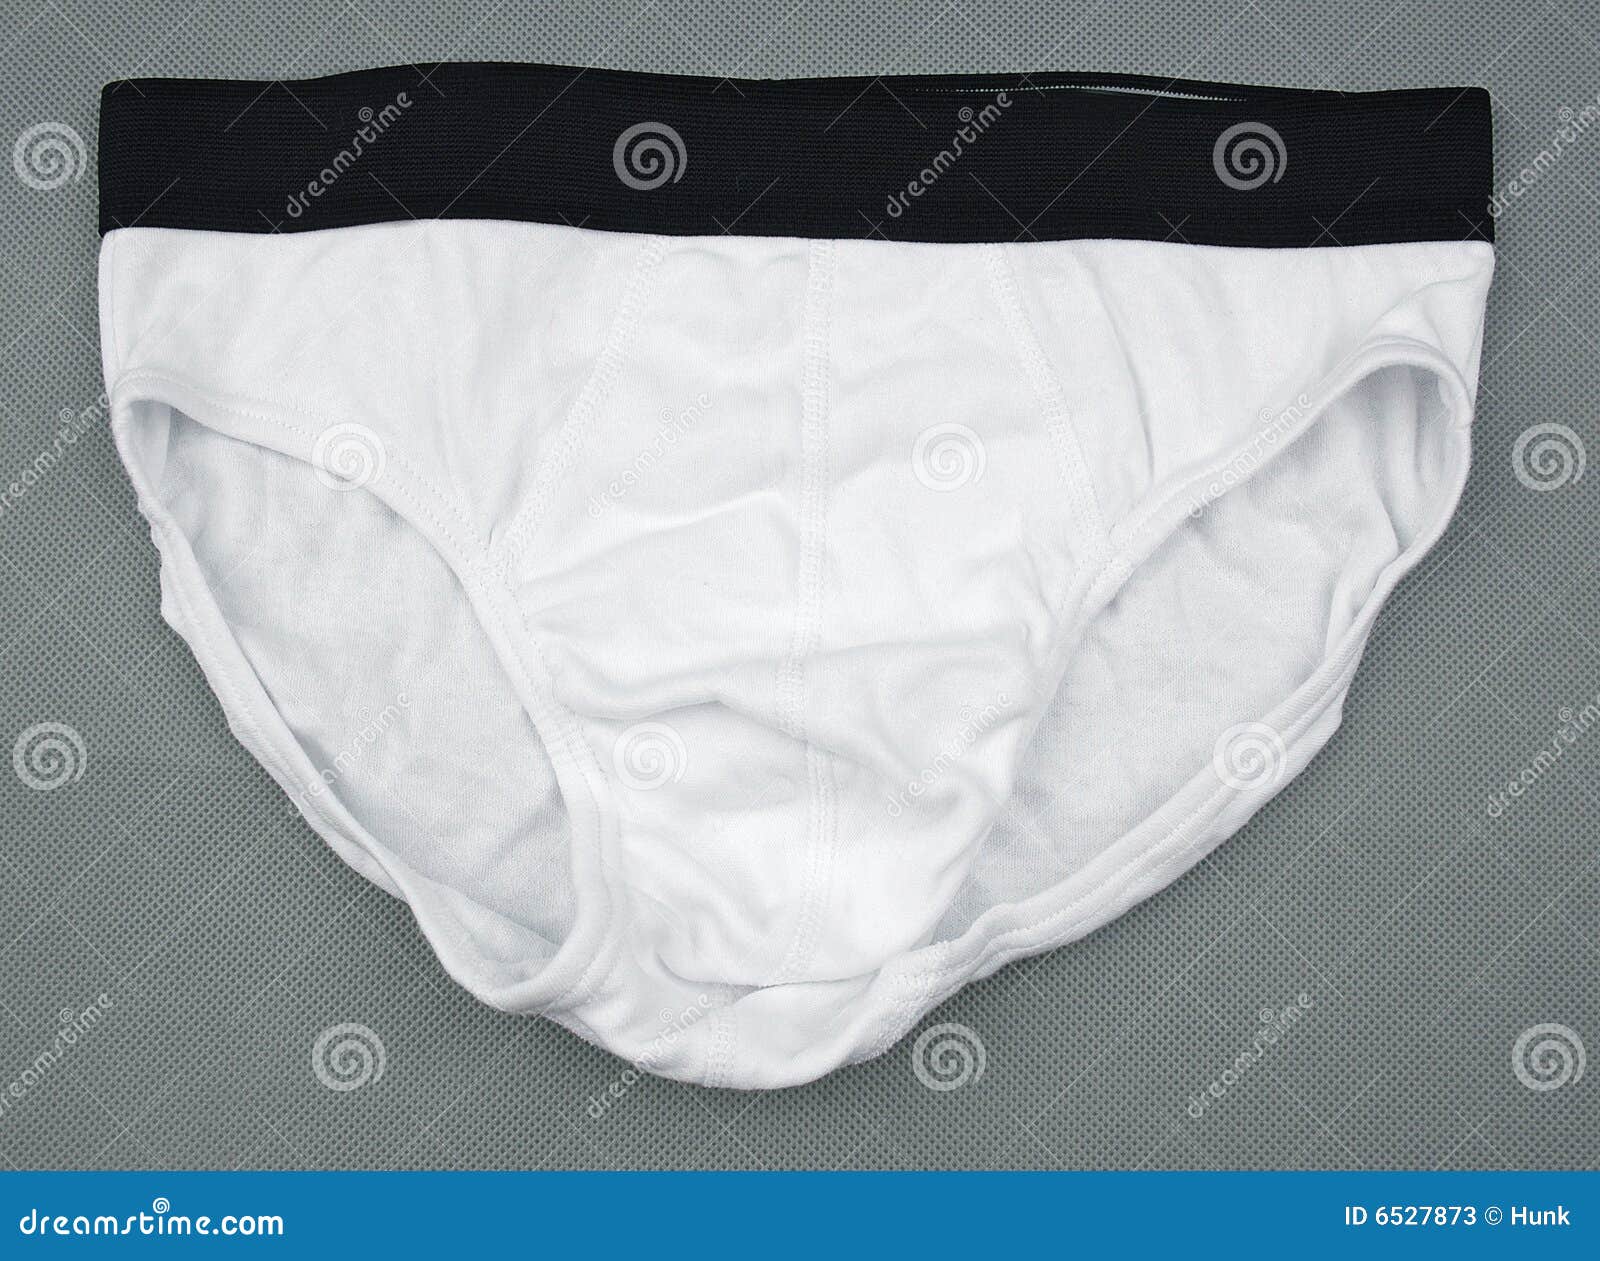 Male underwear stock image. Image of navy, underwear, cloth - 6527873